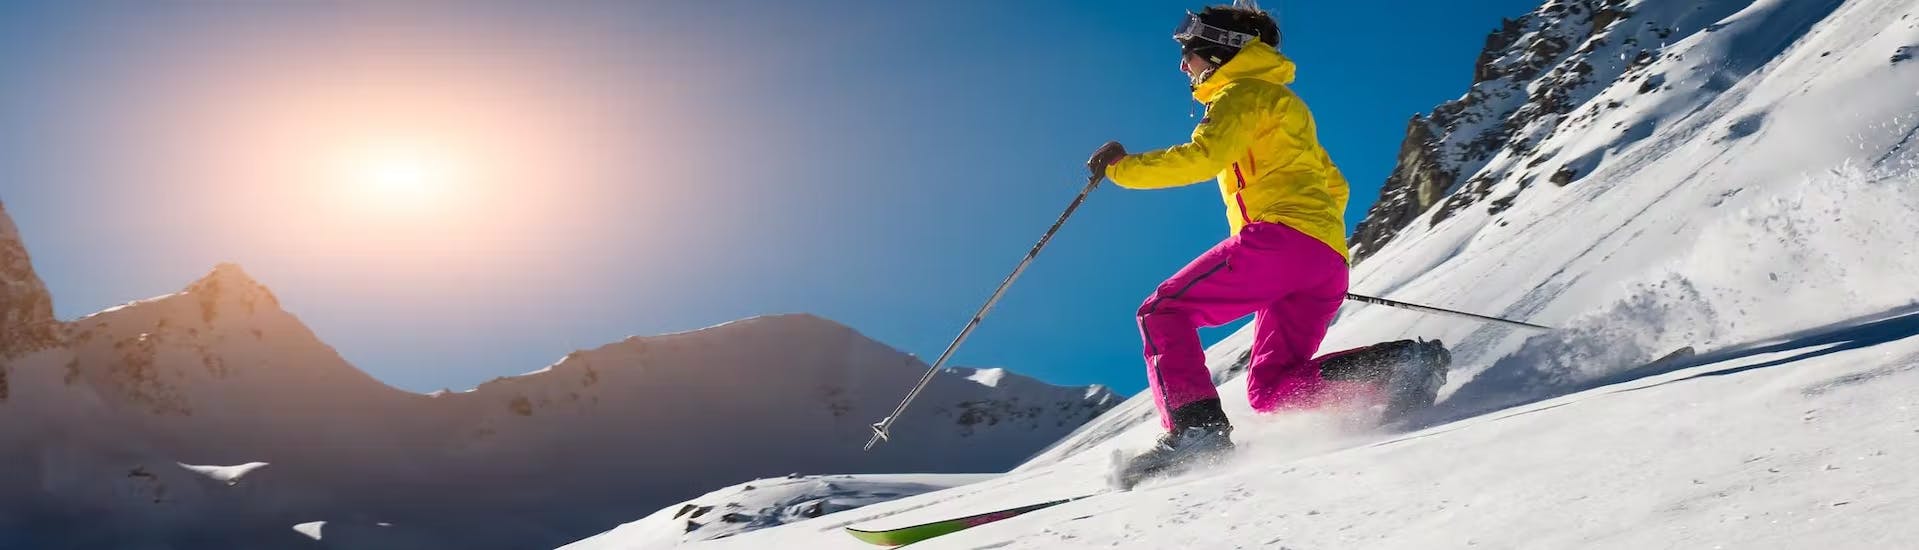 A person having fun during the Private Telemark Skiing Lessons for All Levels with Scuola Italiana Sci Dolomiti San Martino.